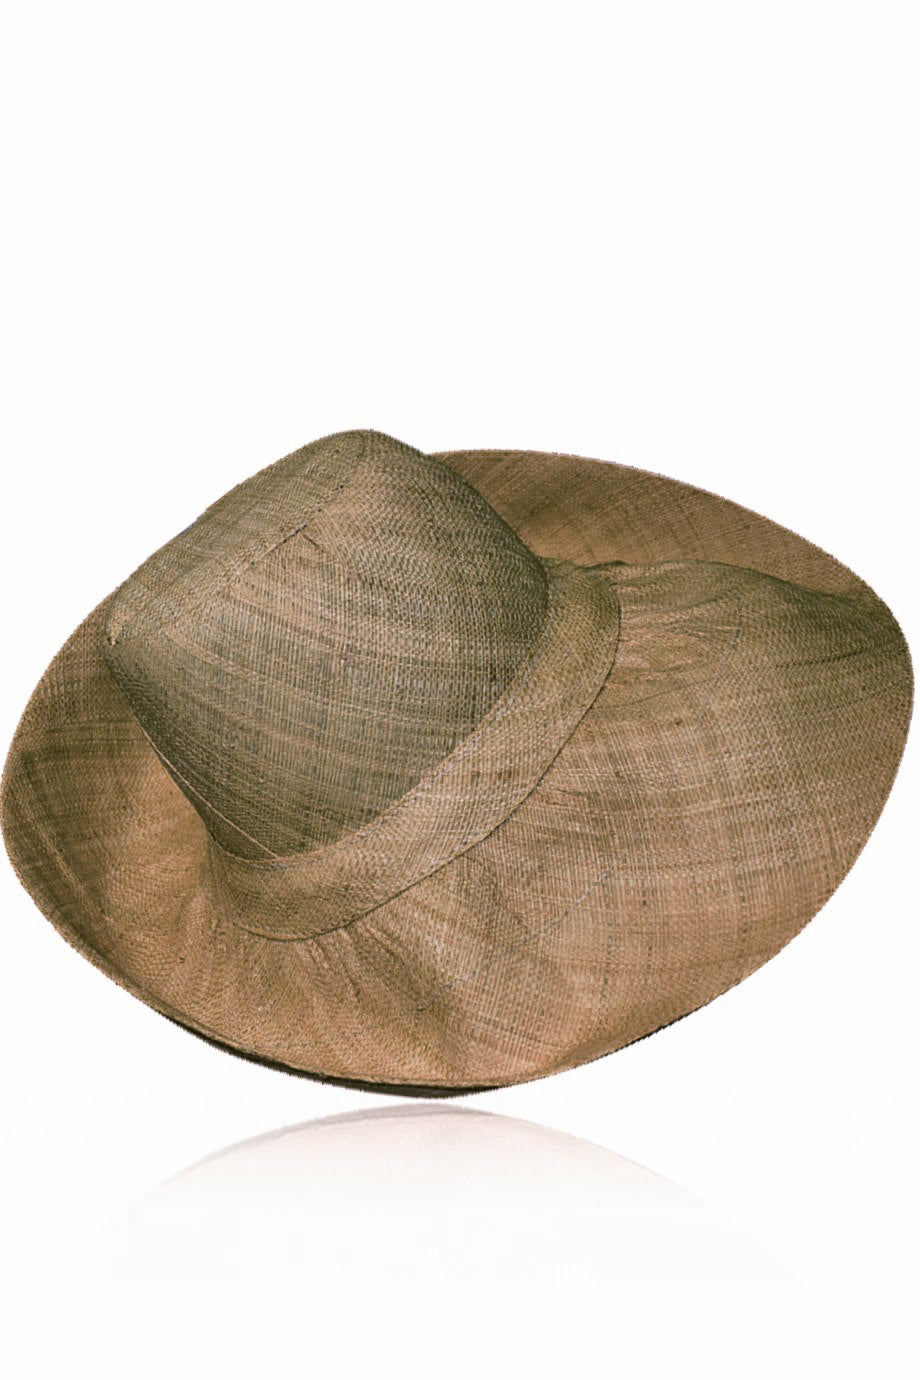 Kenzie Beige Handmade Wide Madagascar Hat